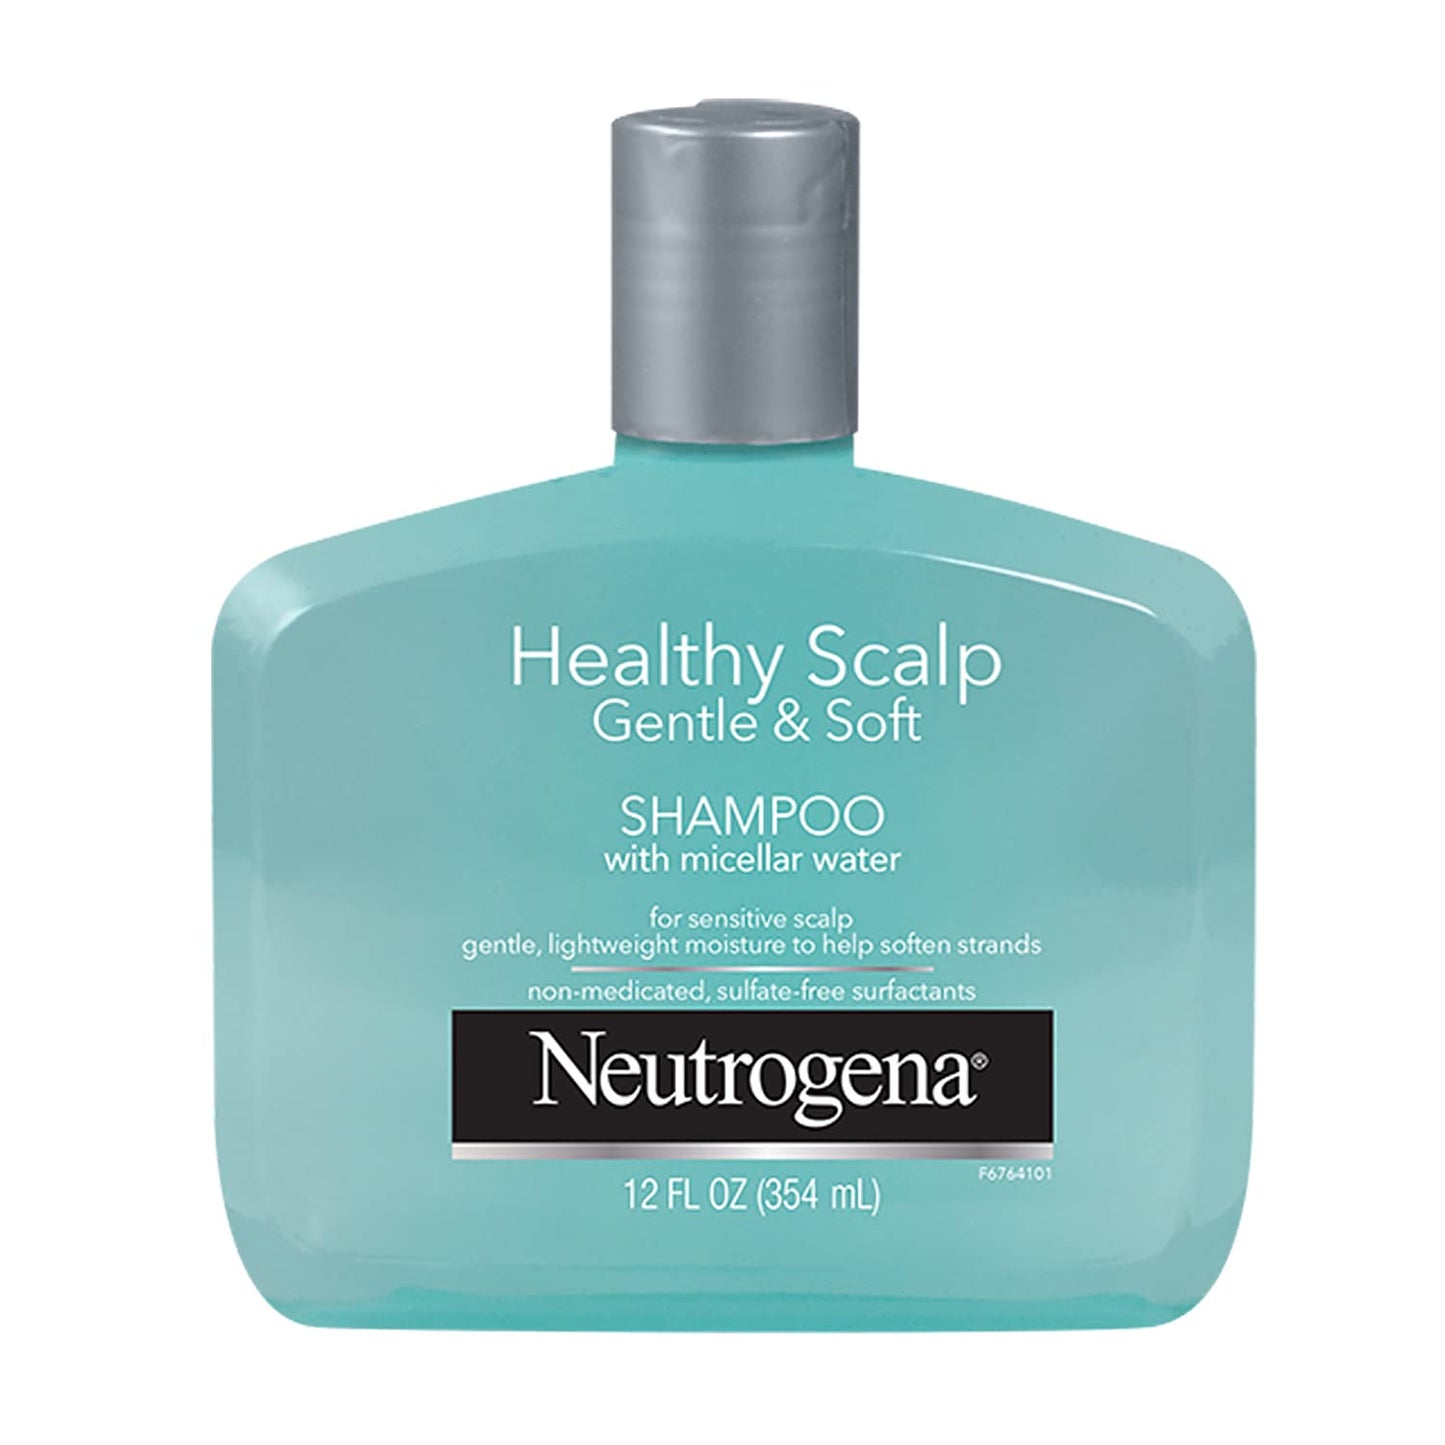 Neutrogena Gentle & Soft with Micellar Water 354ml / 12 fl oz